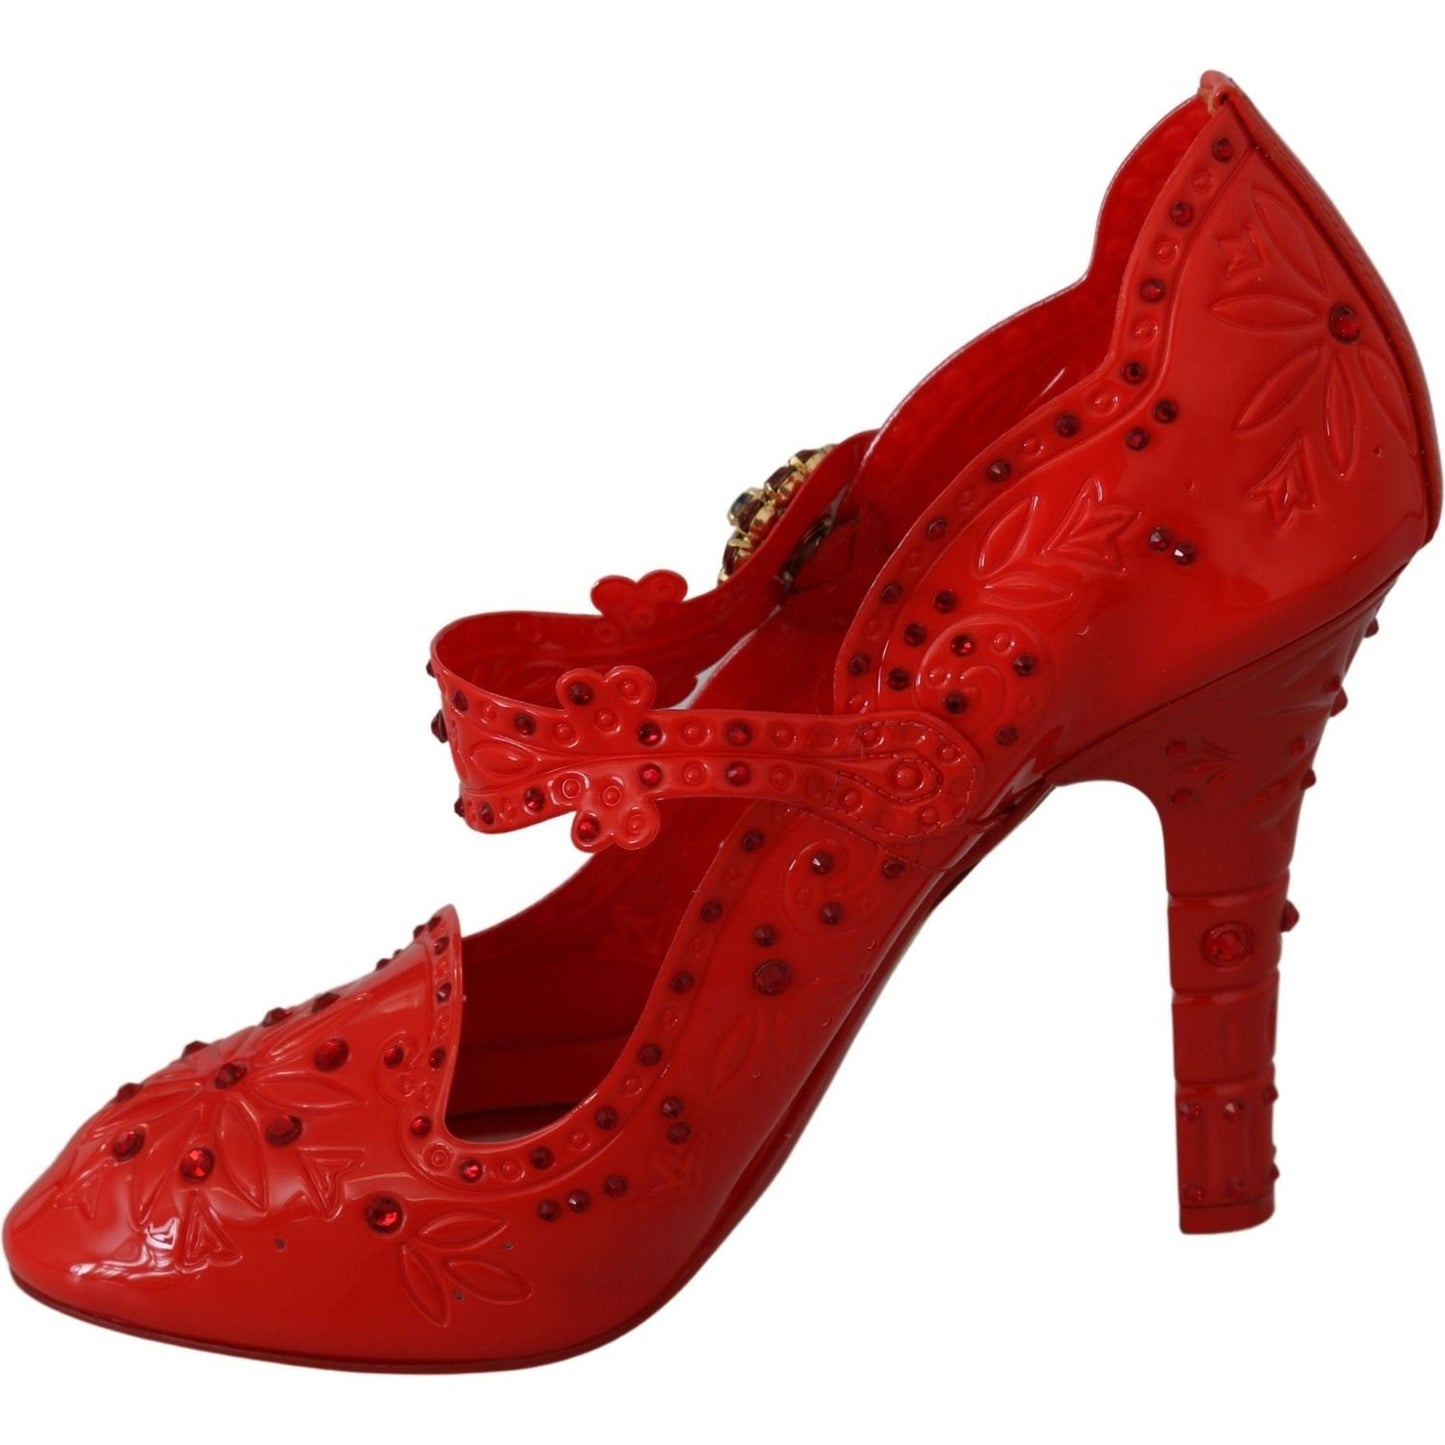 Dolce & Gabbana Chic Red Crystal Cinderella Pumps red-floral-crystal-cinderella-heels-shoes IMG_7995-d71b1192-d1e.jpg